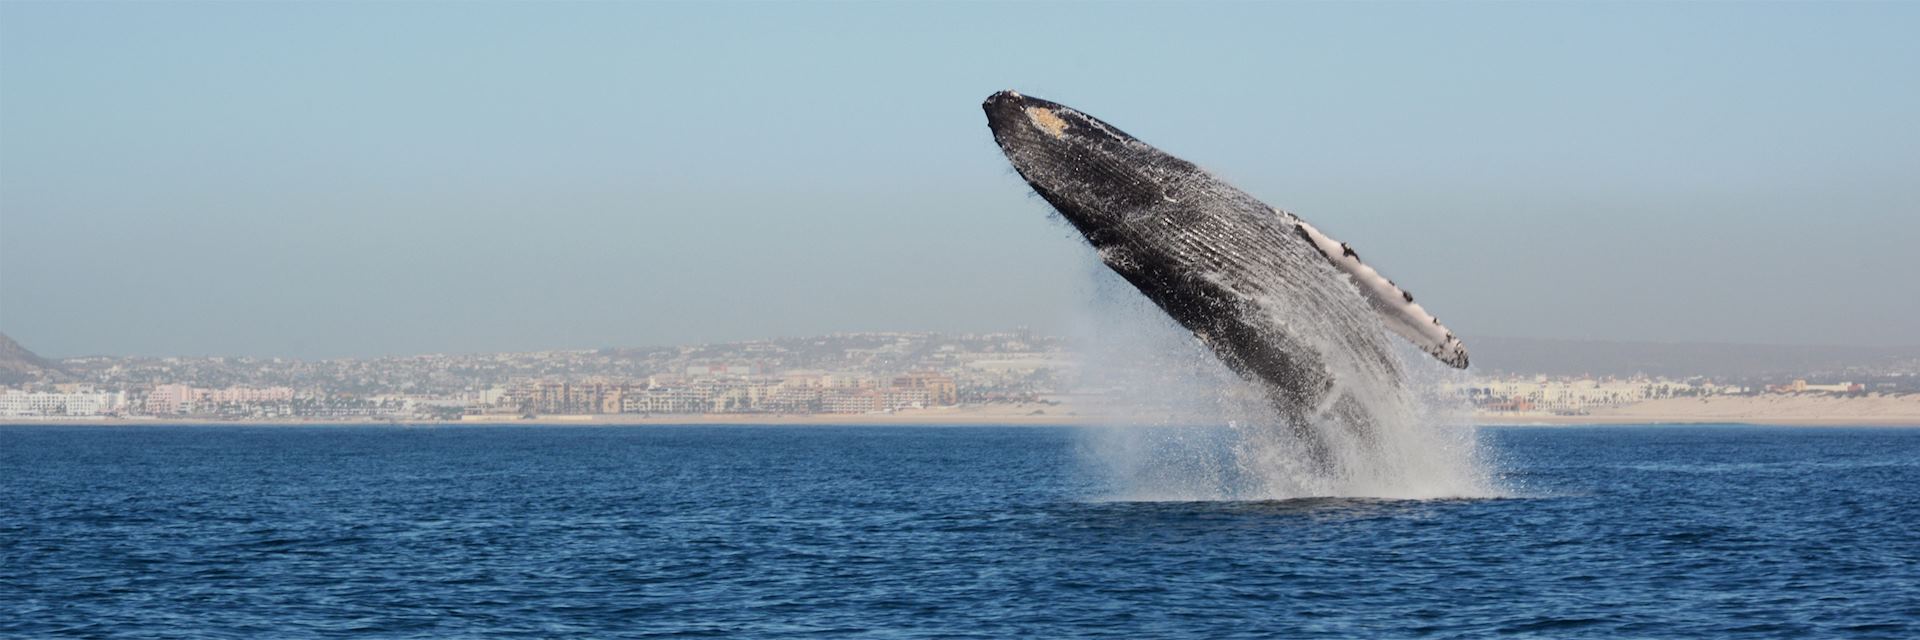 Whale breaching, Baja California